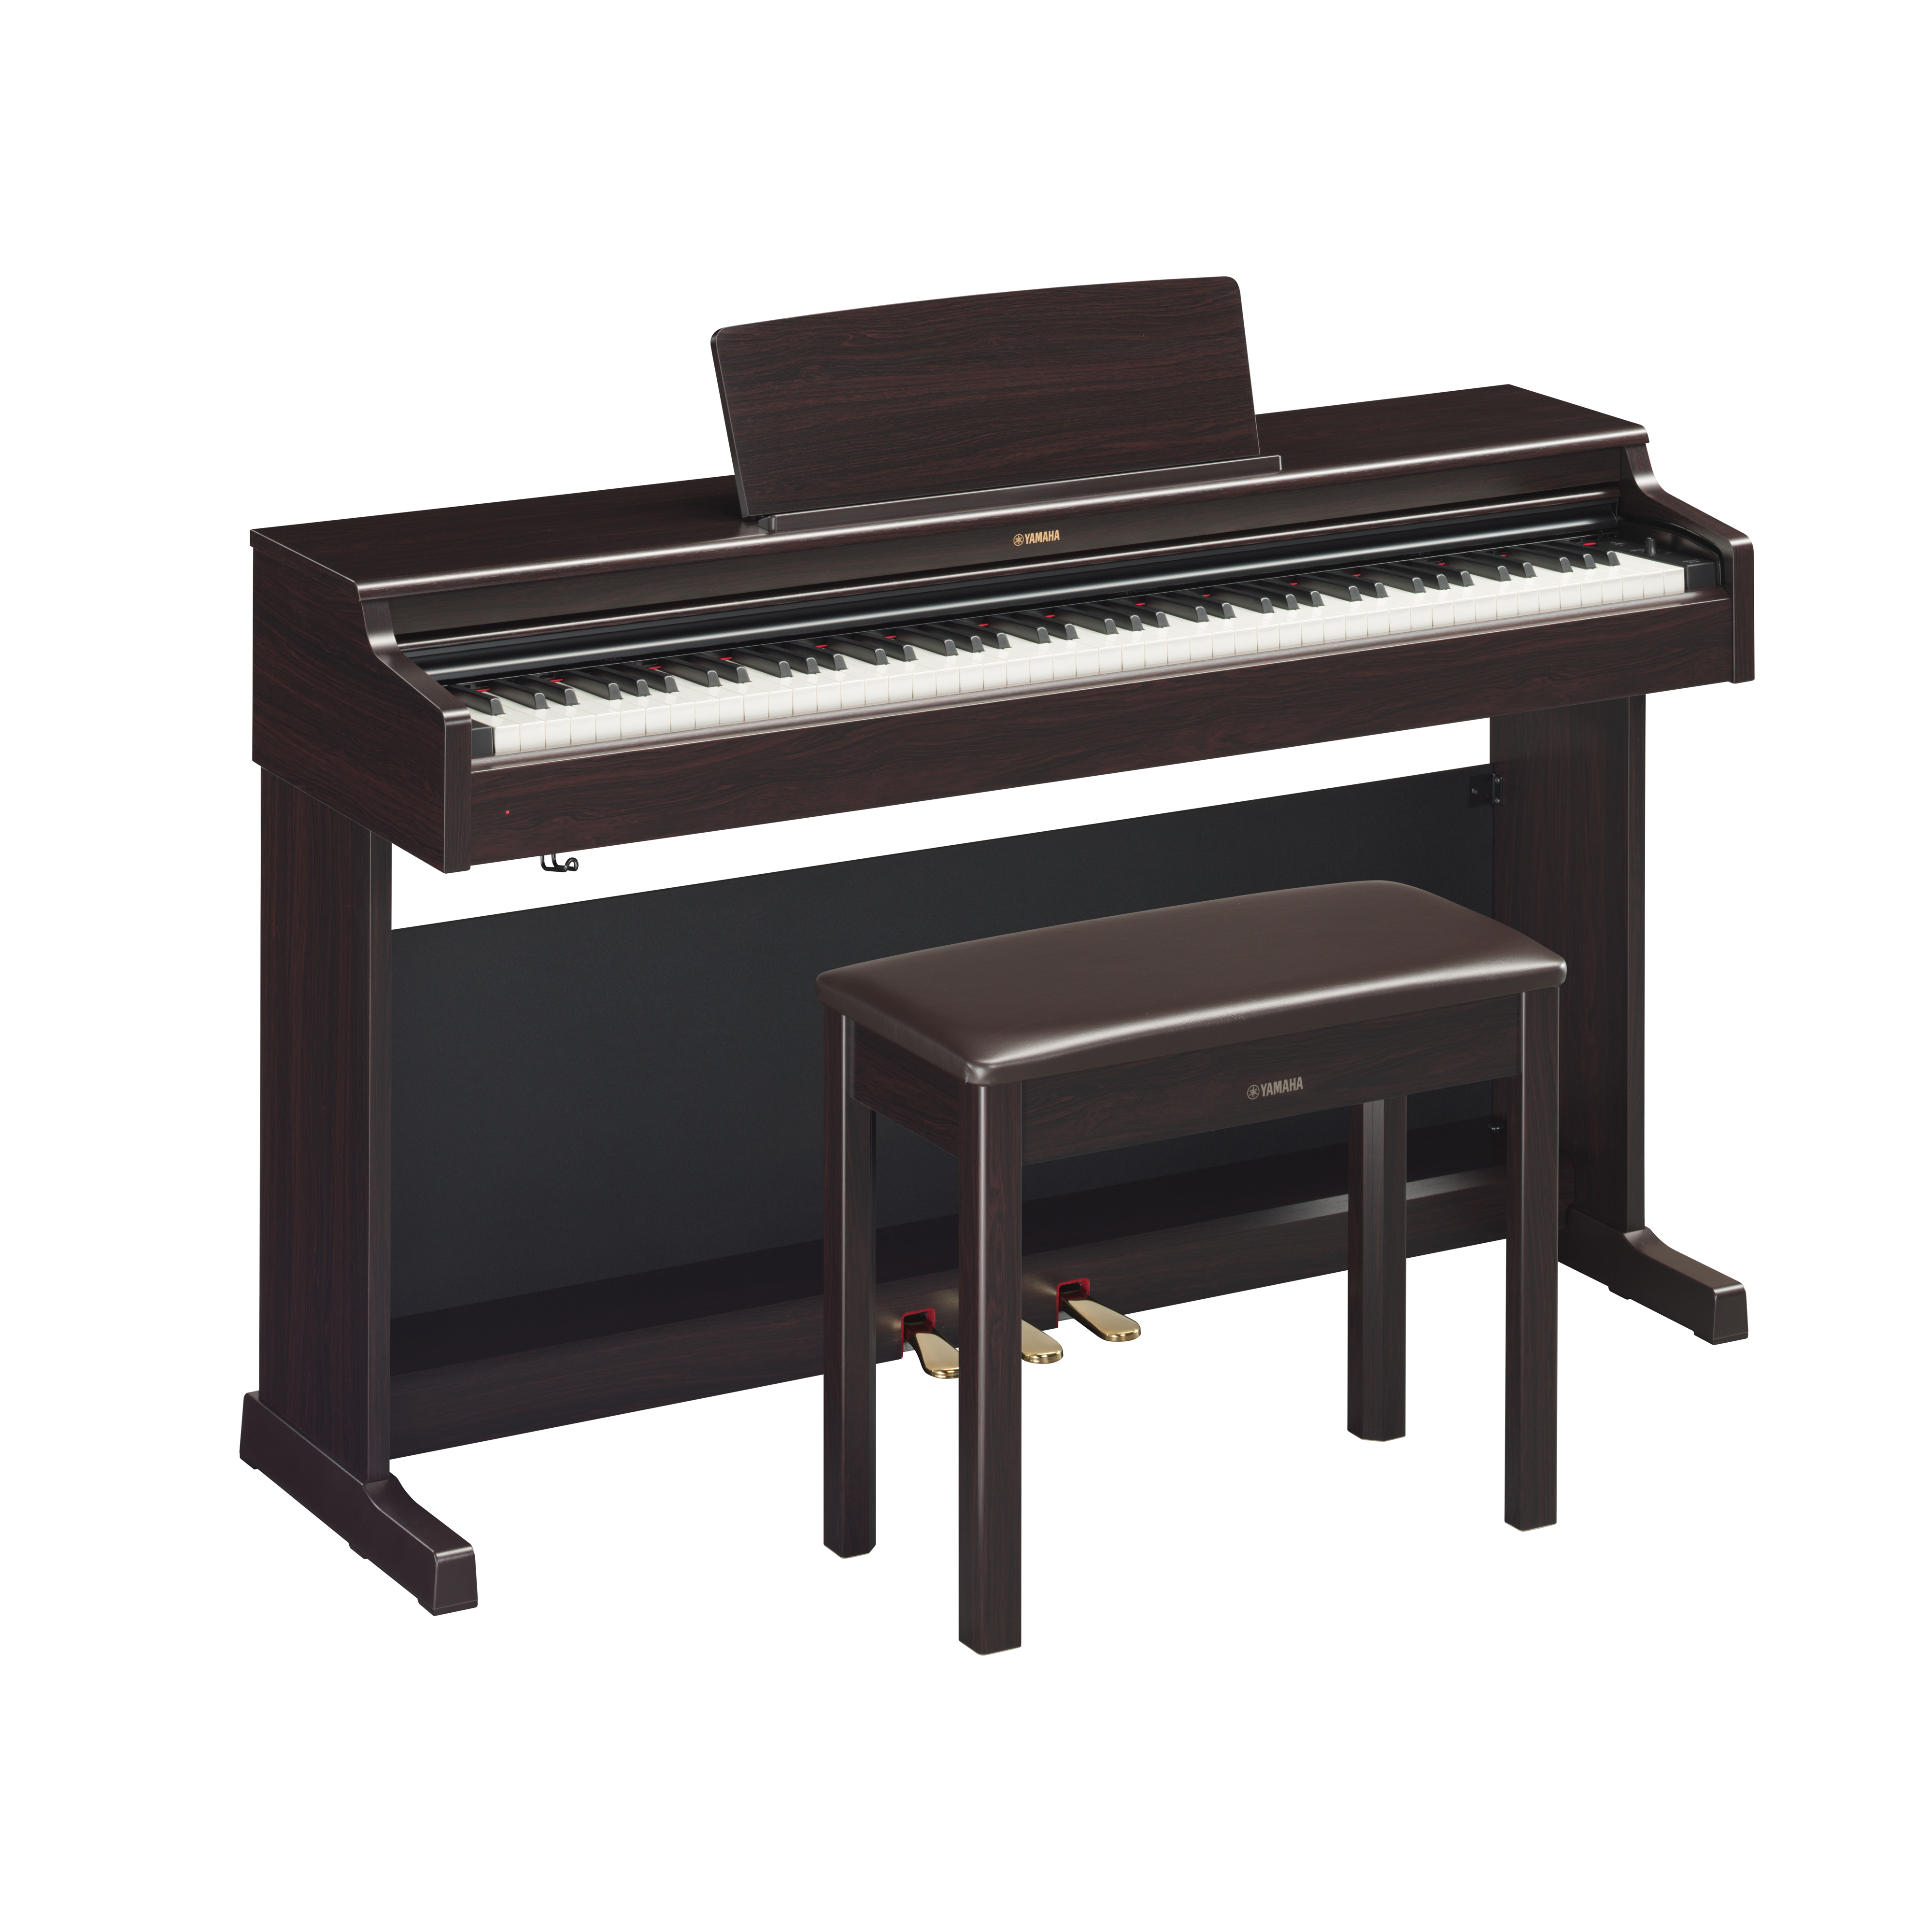 YDP-164 - Overzicht - ARIUS - Piano's - Muziekinstrumenten 